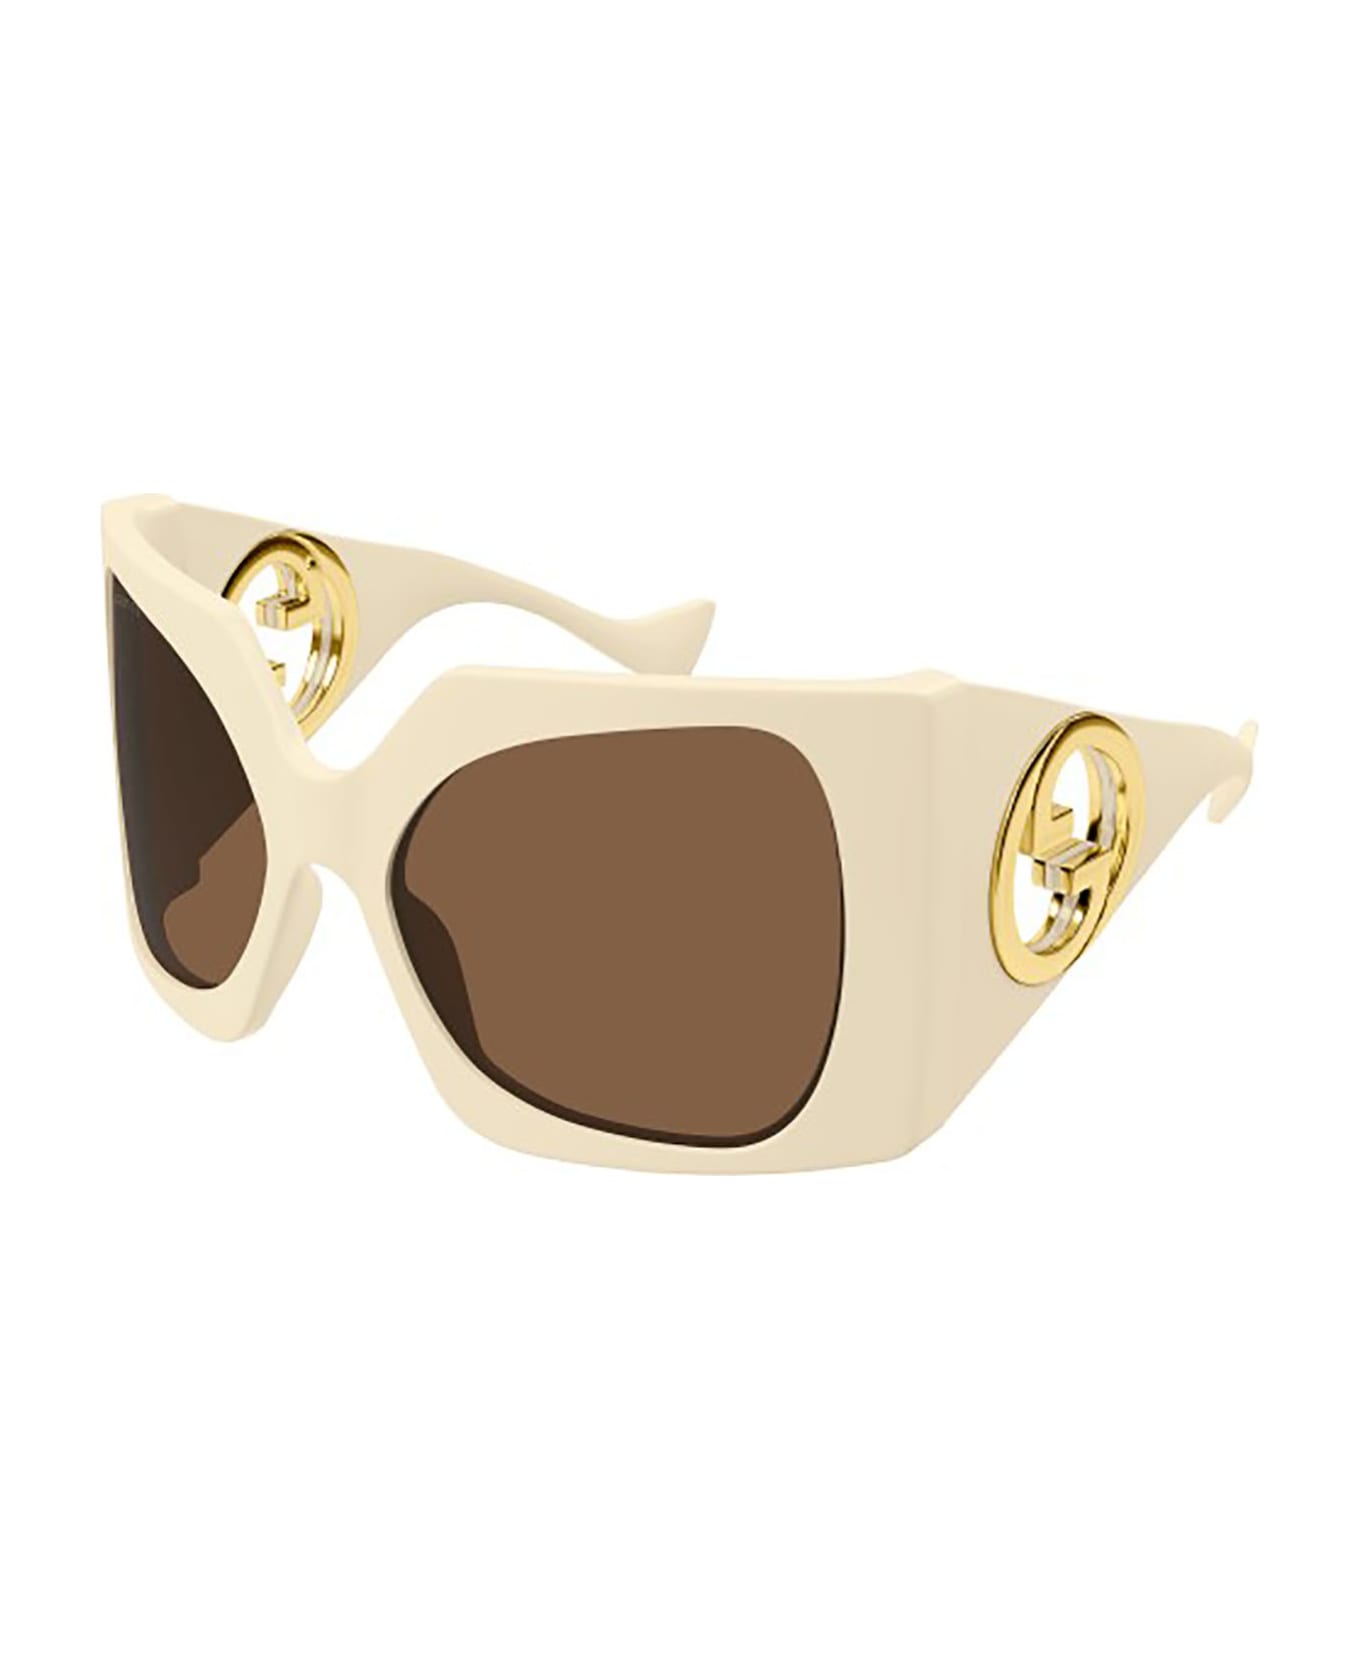 Gucci Eyewear GG1255S Sunglasses - Ivory White Brown サングラス